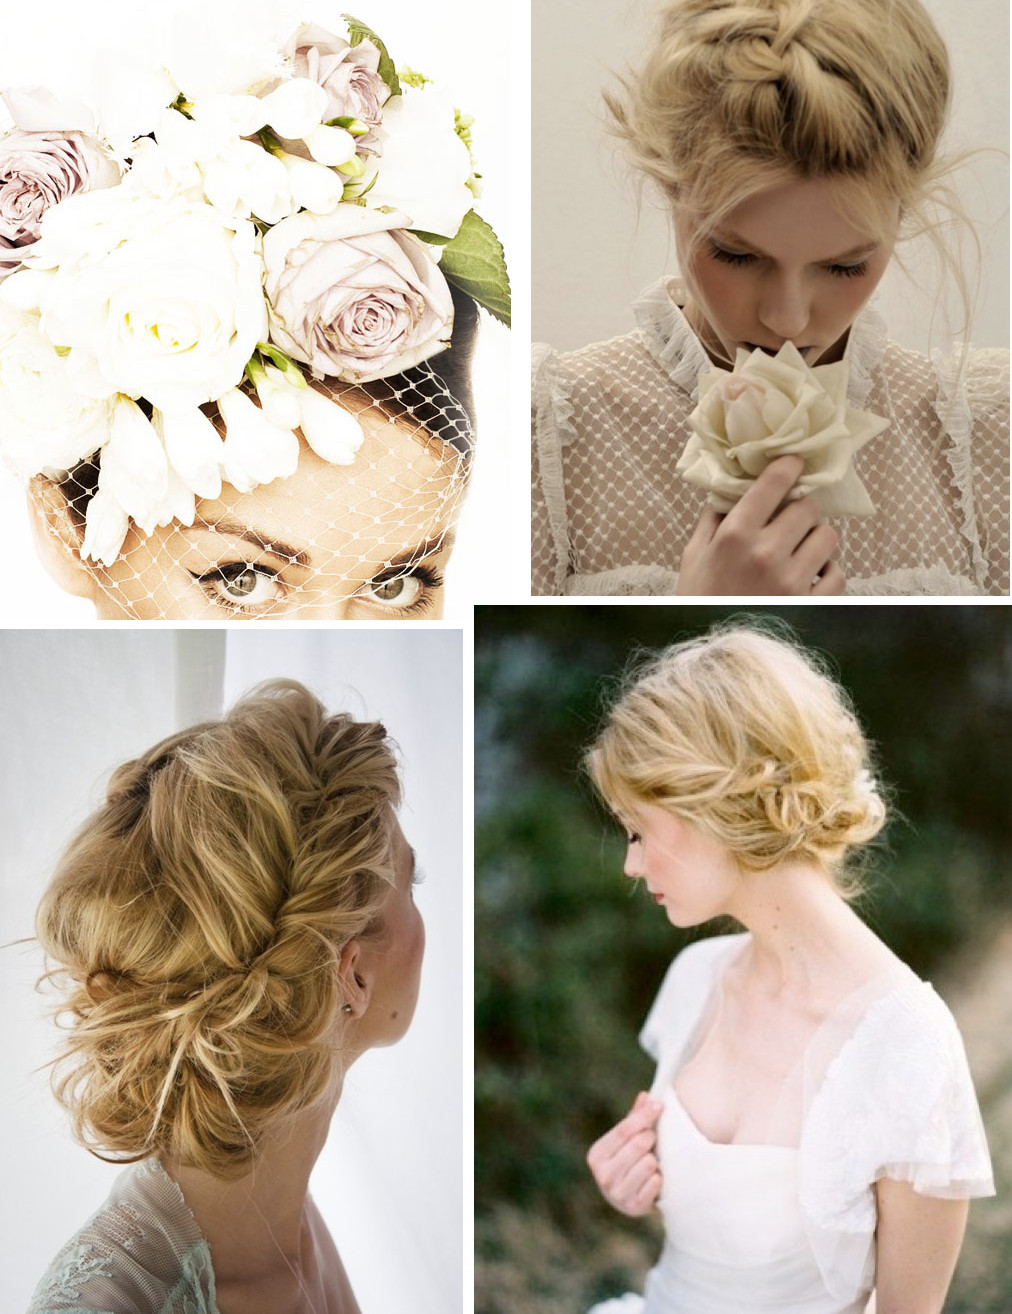 Best ideas about DIY Bridal Hair
. Save or Pin DIY wedding hair tutorials bridal beauty celebrity Now.